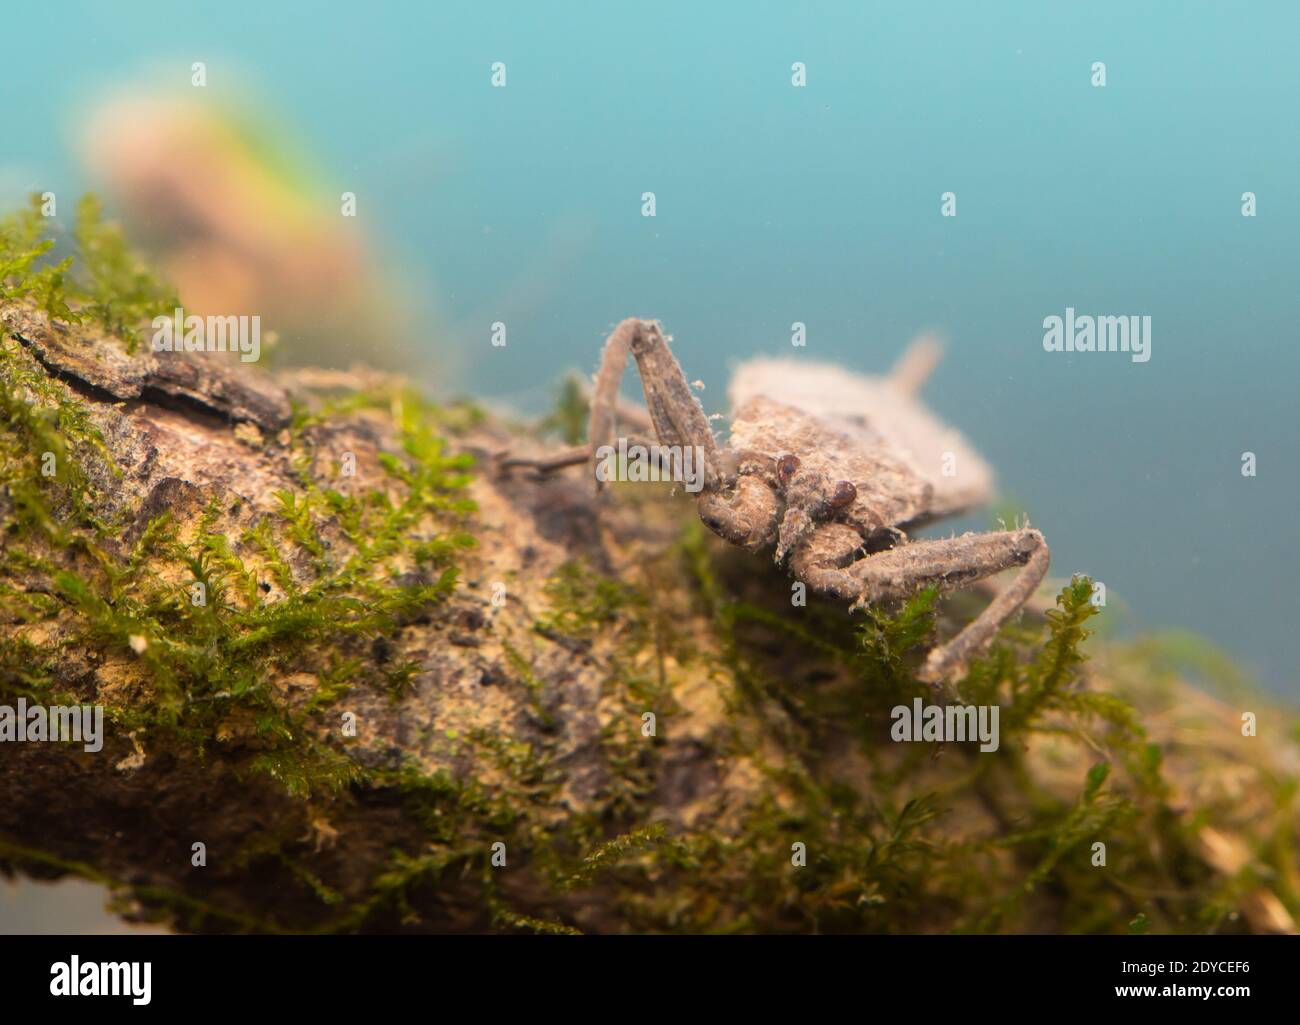 Water scorpion Stock Photo